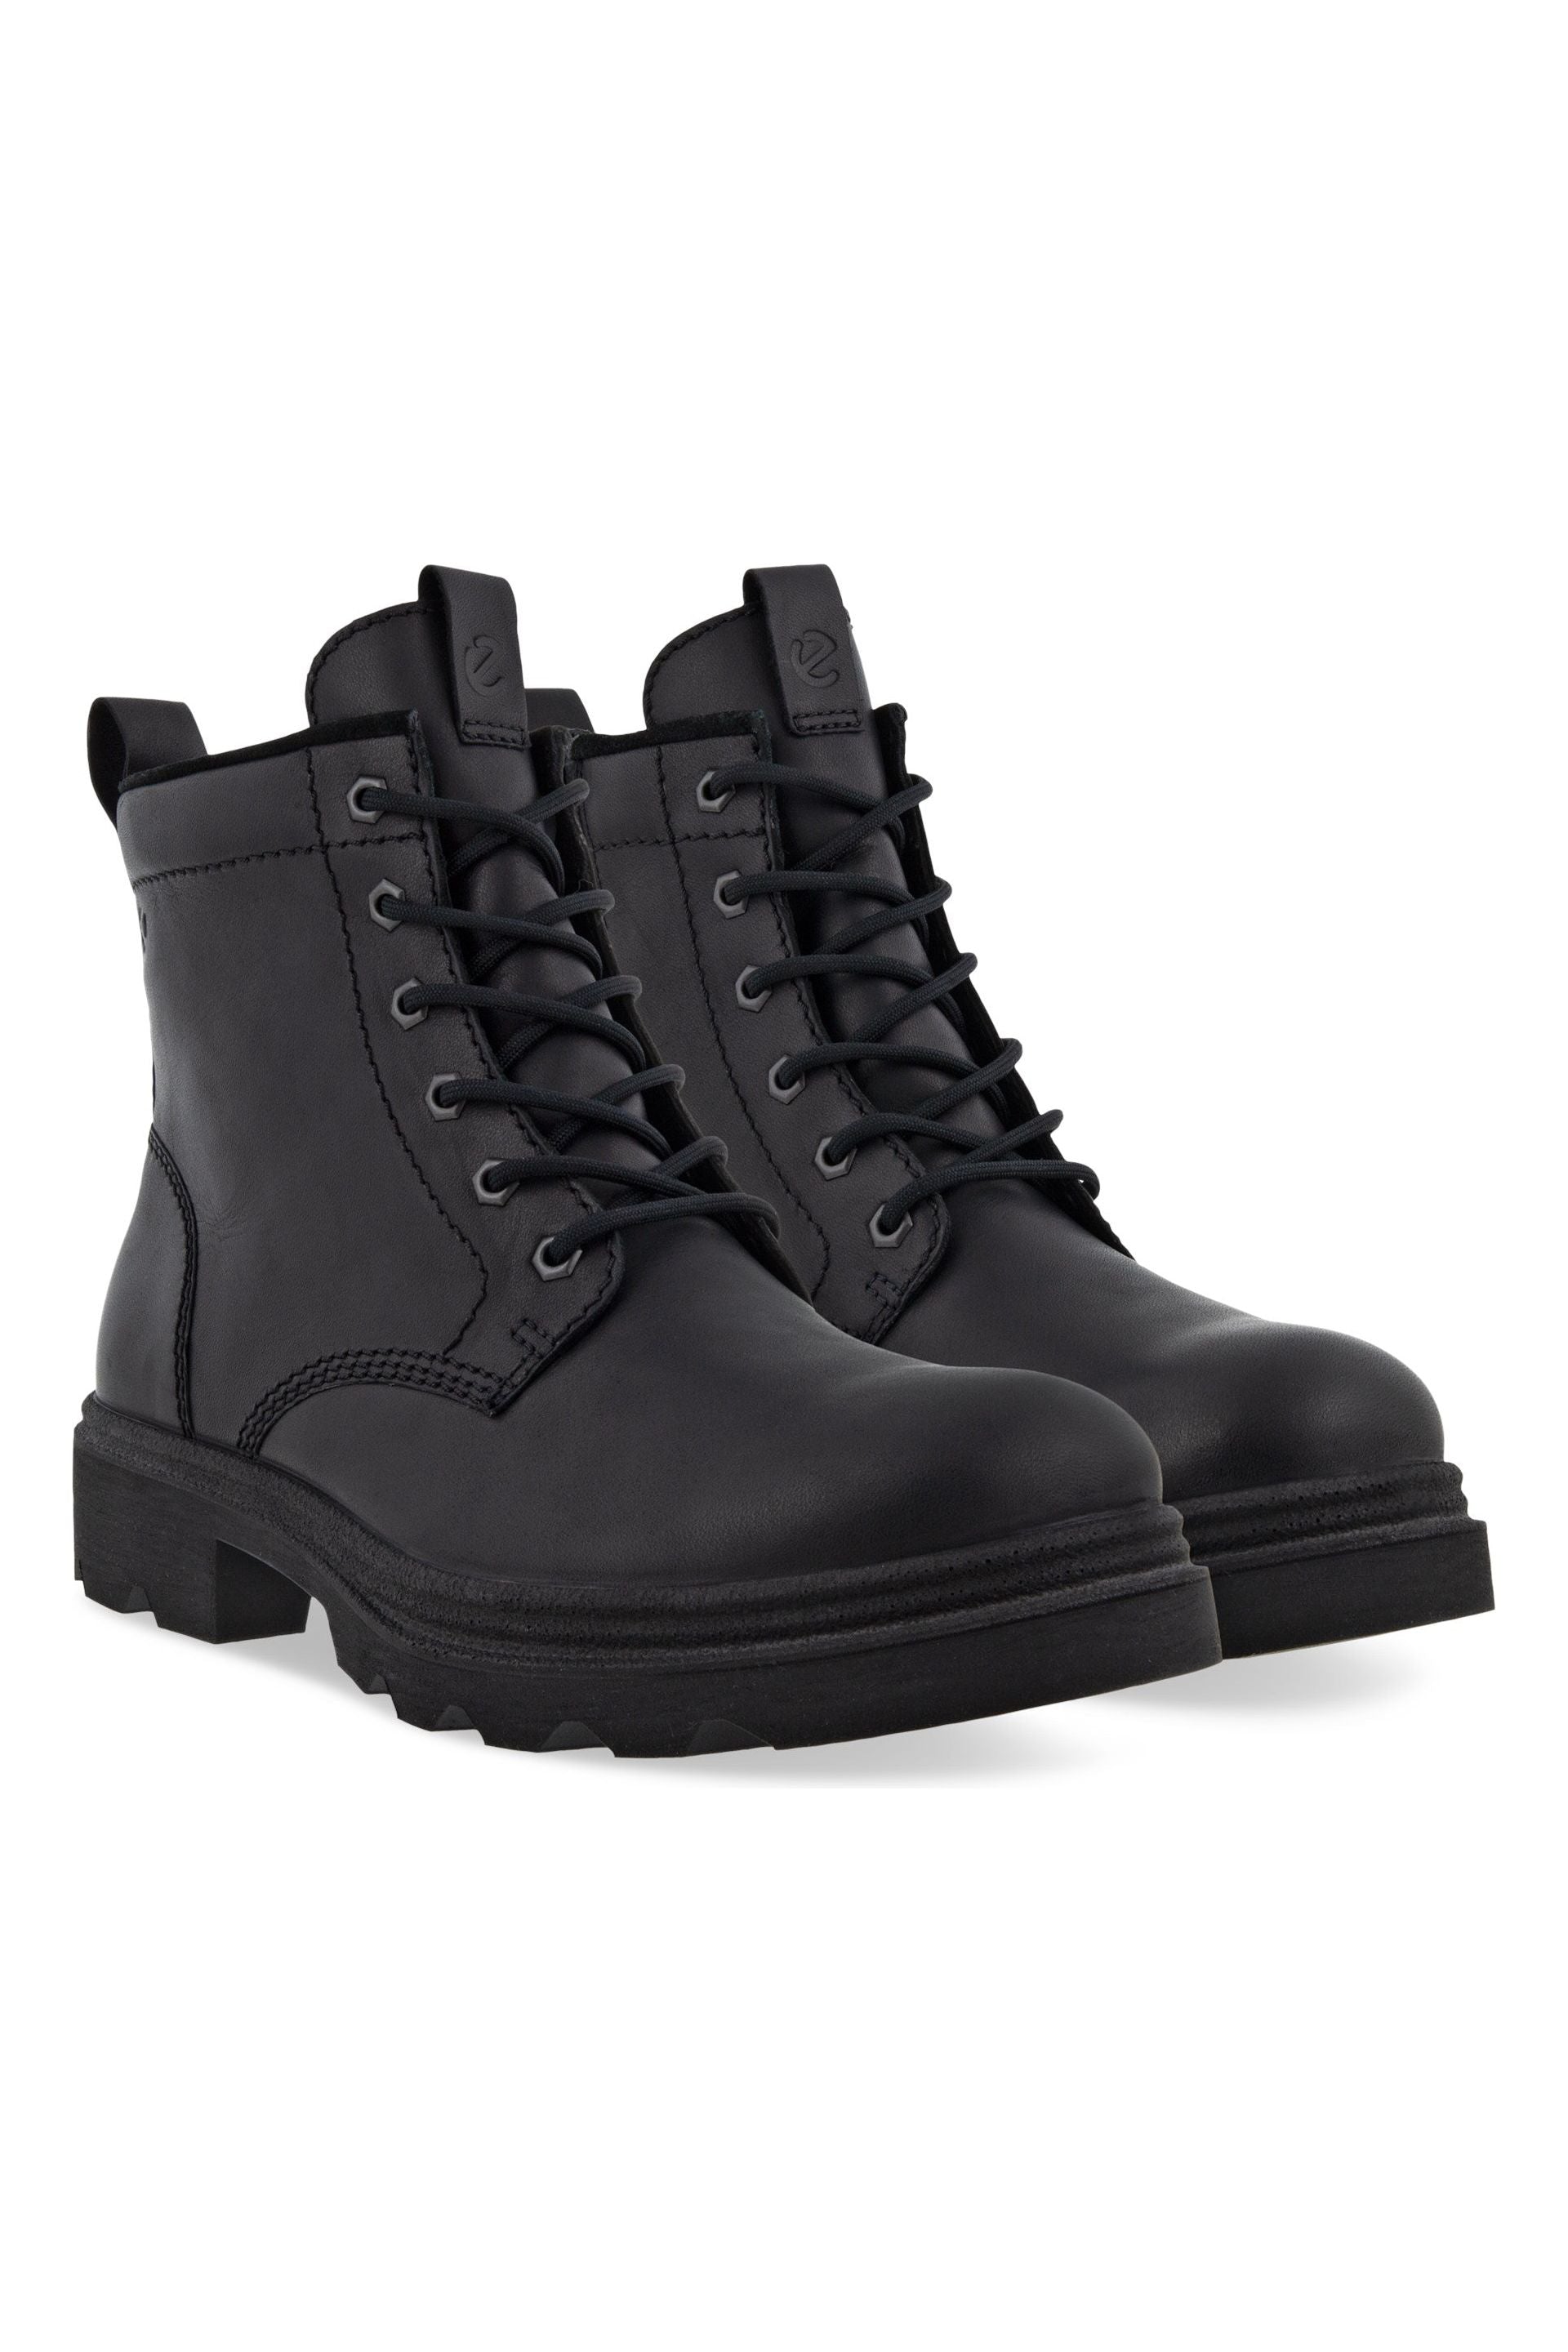 ECCO 214724-01001 Grainer black leather boot mens